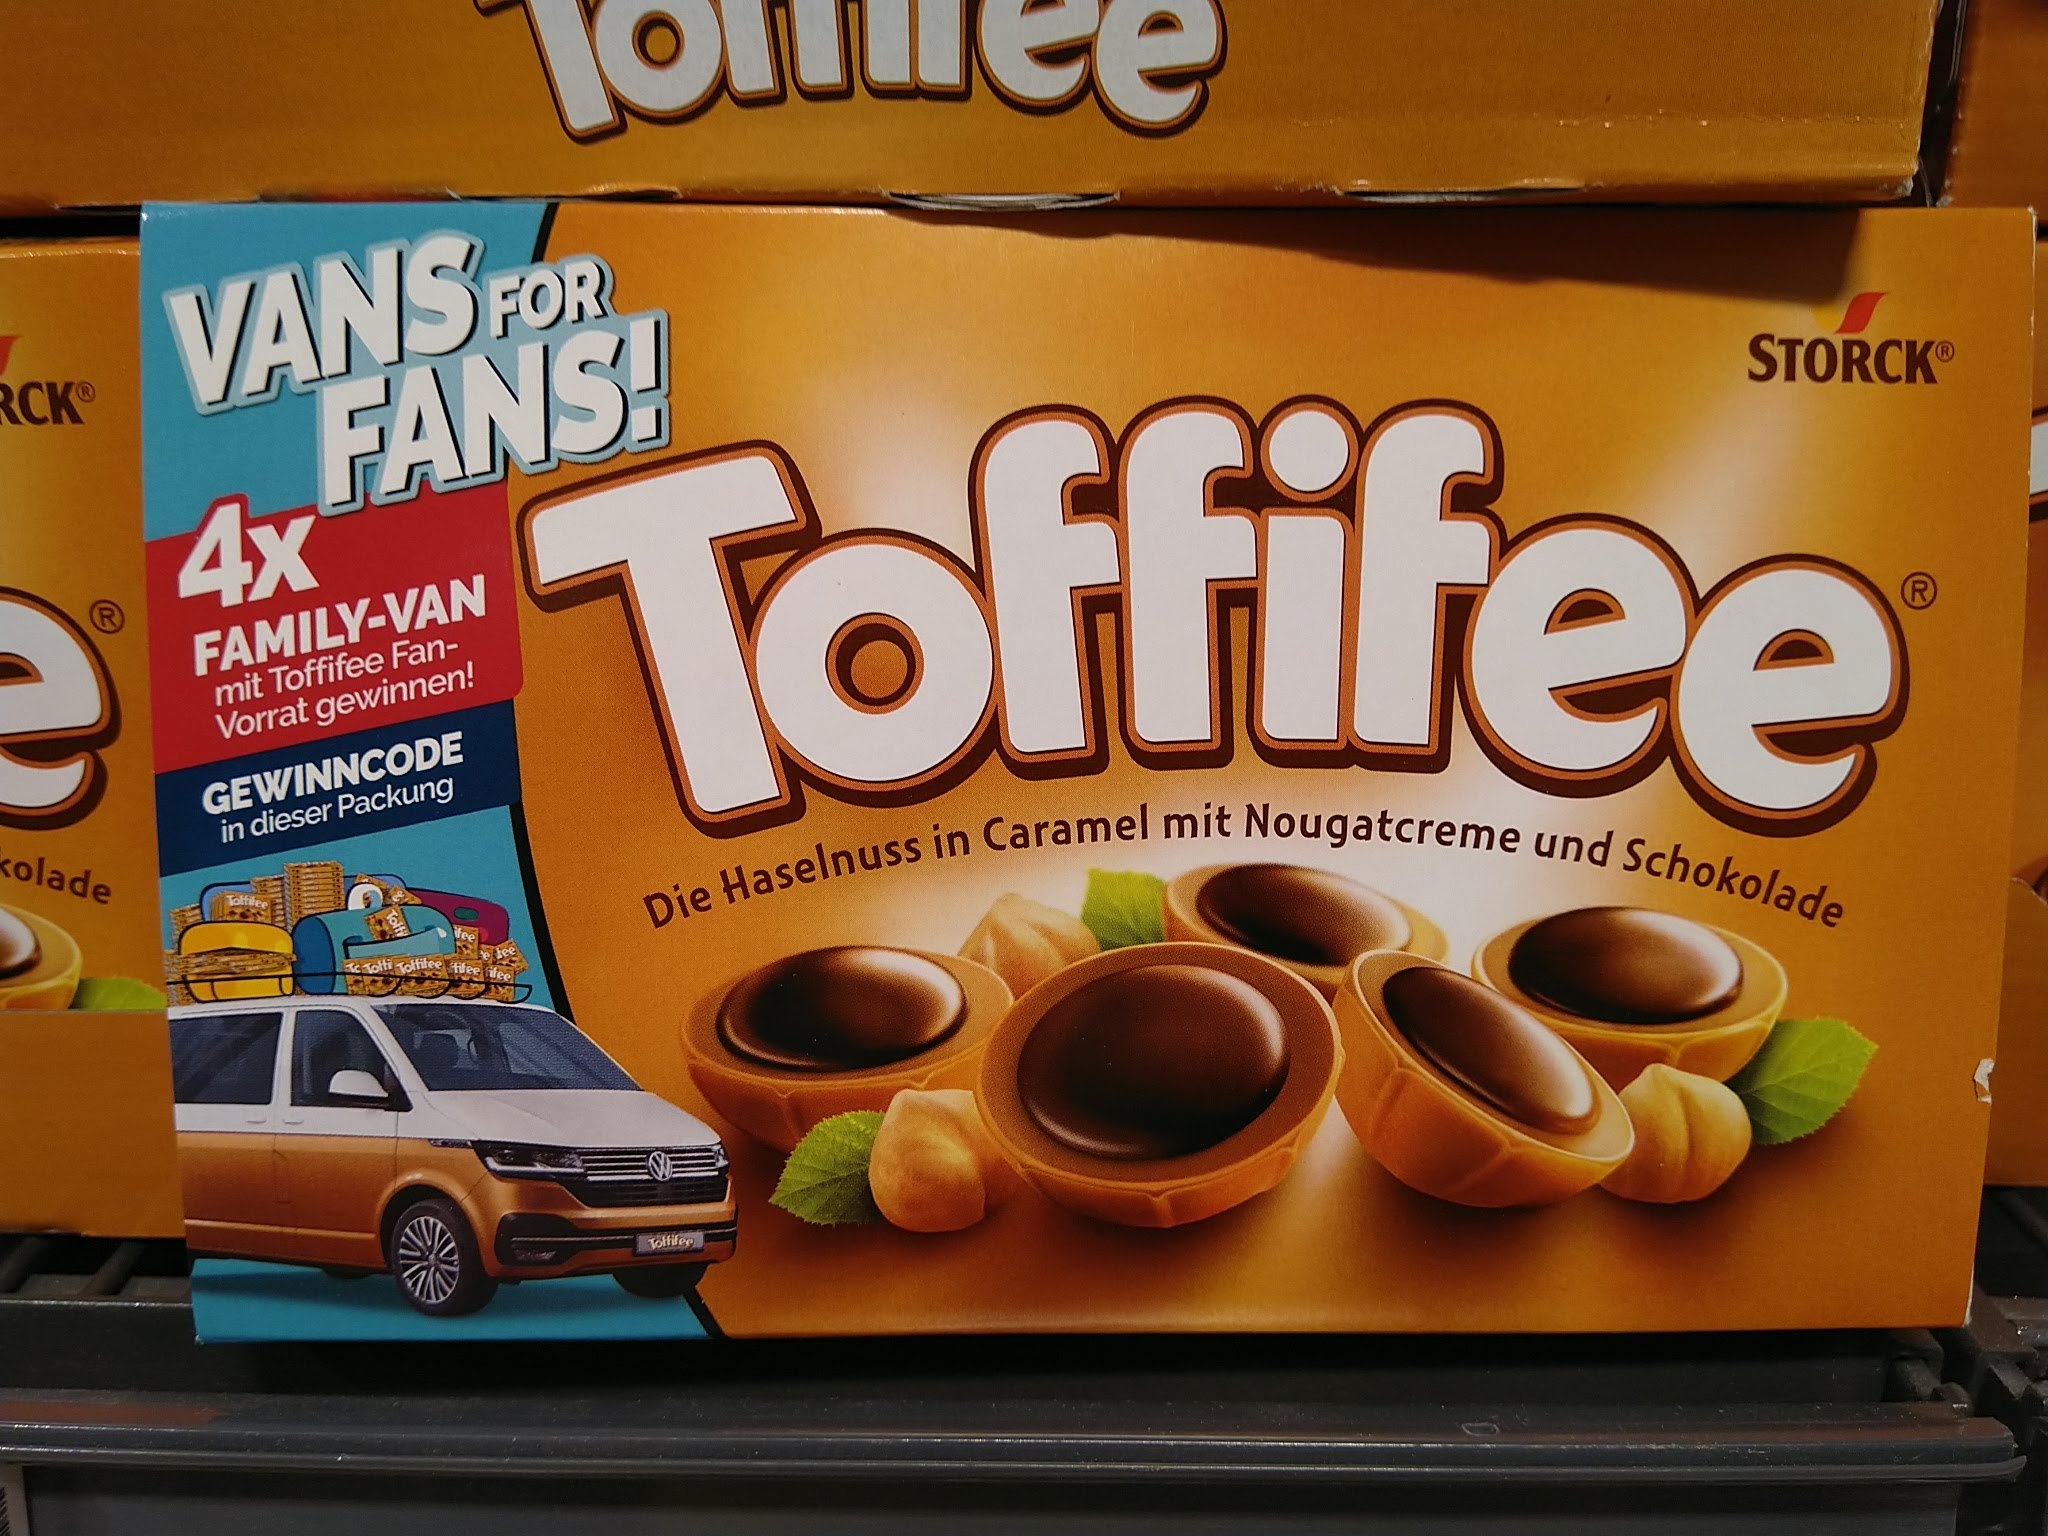 Toffifee Vans for Fans - VW Family Van